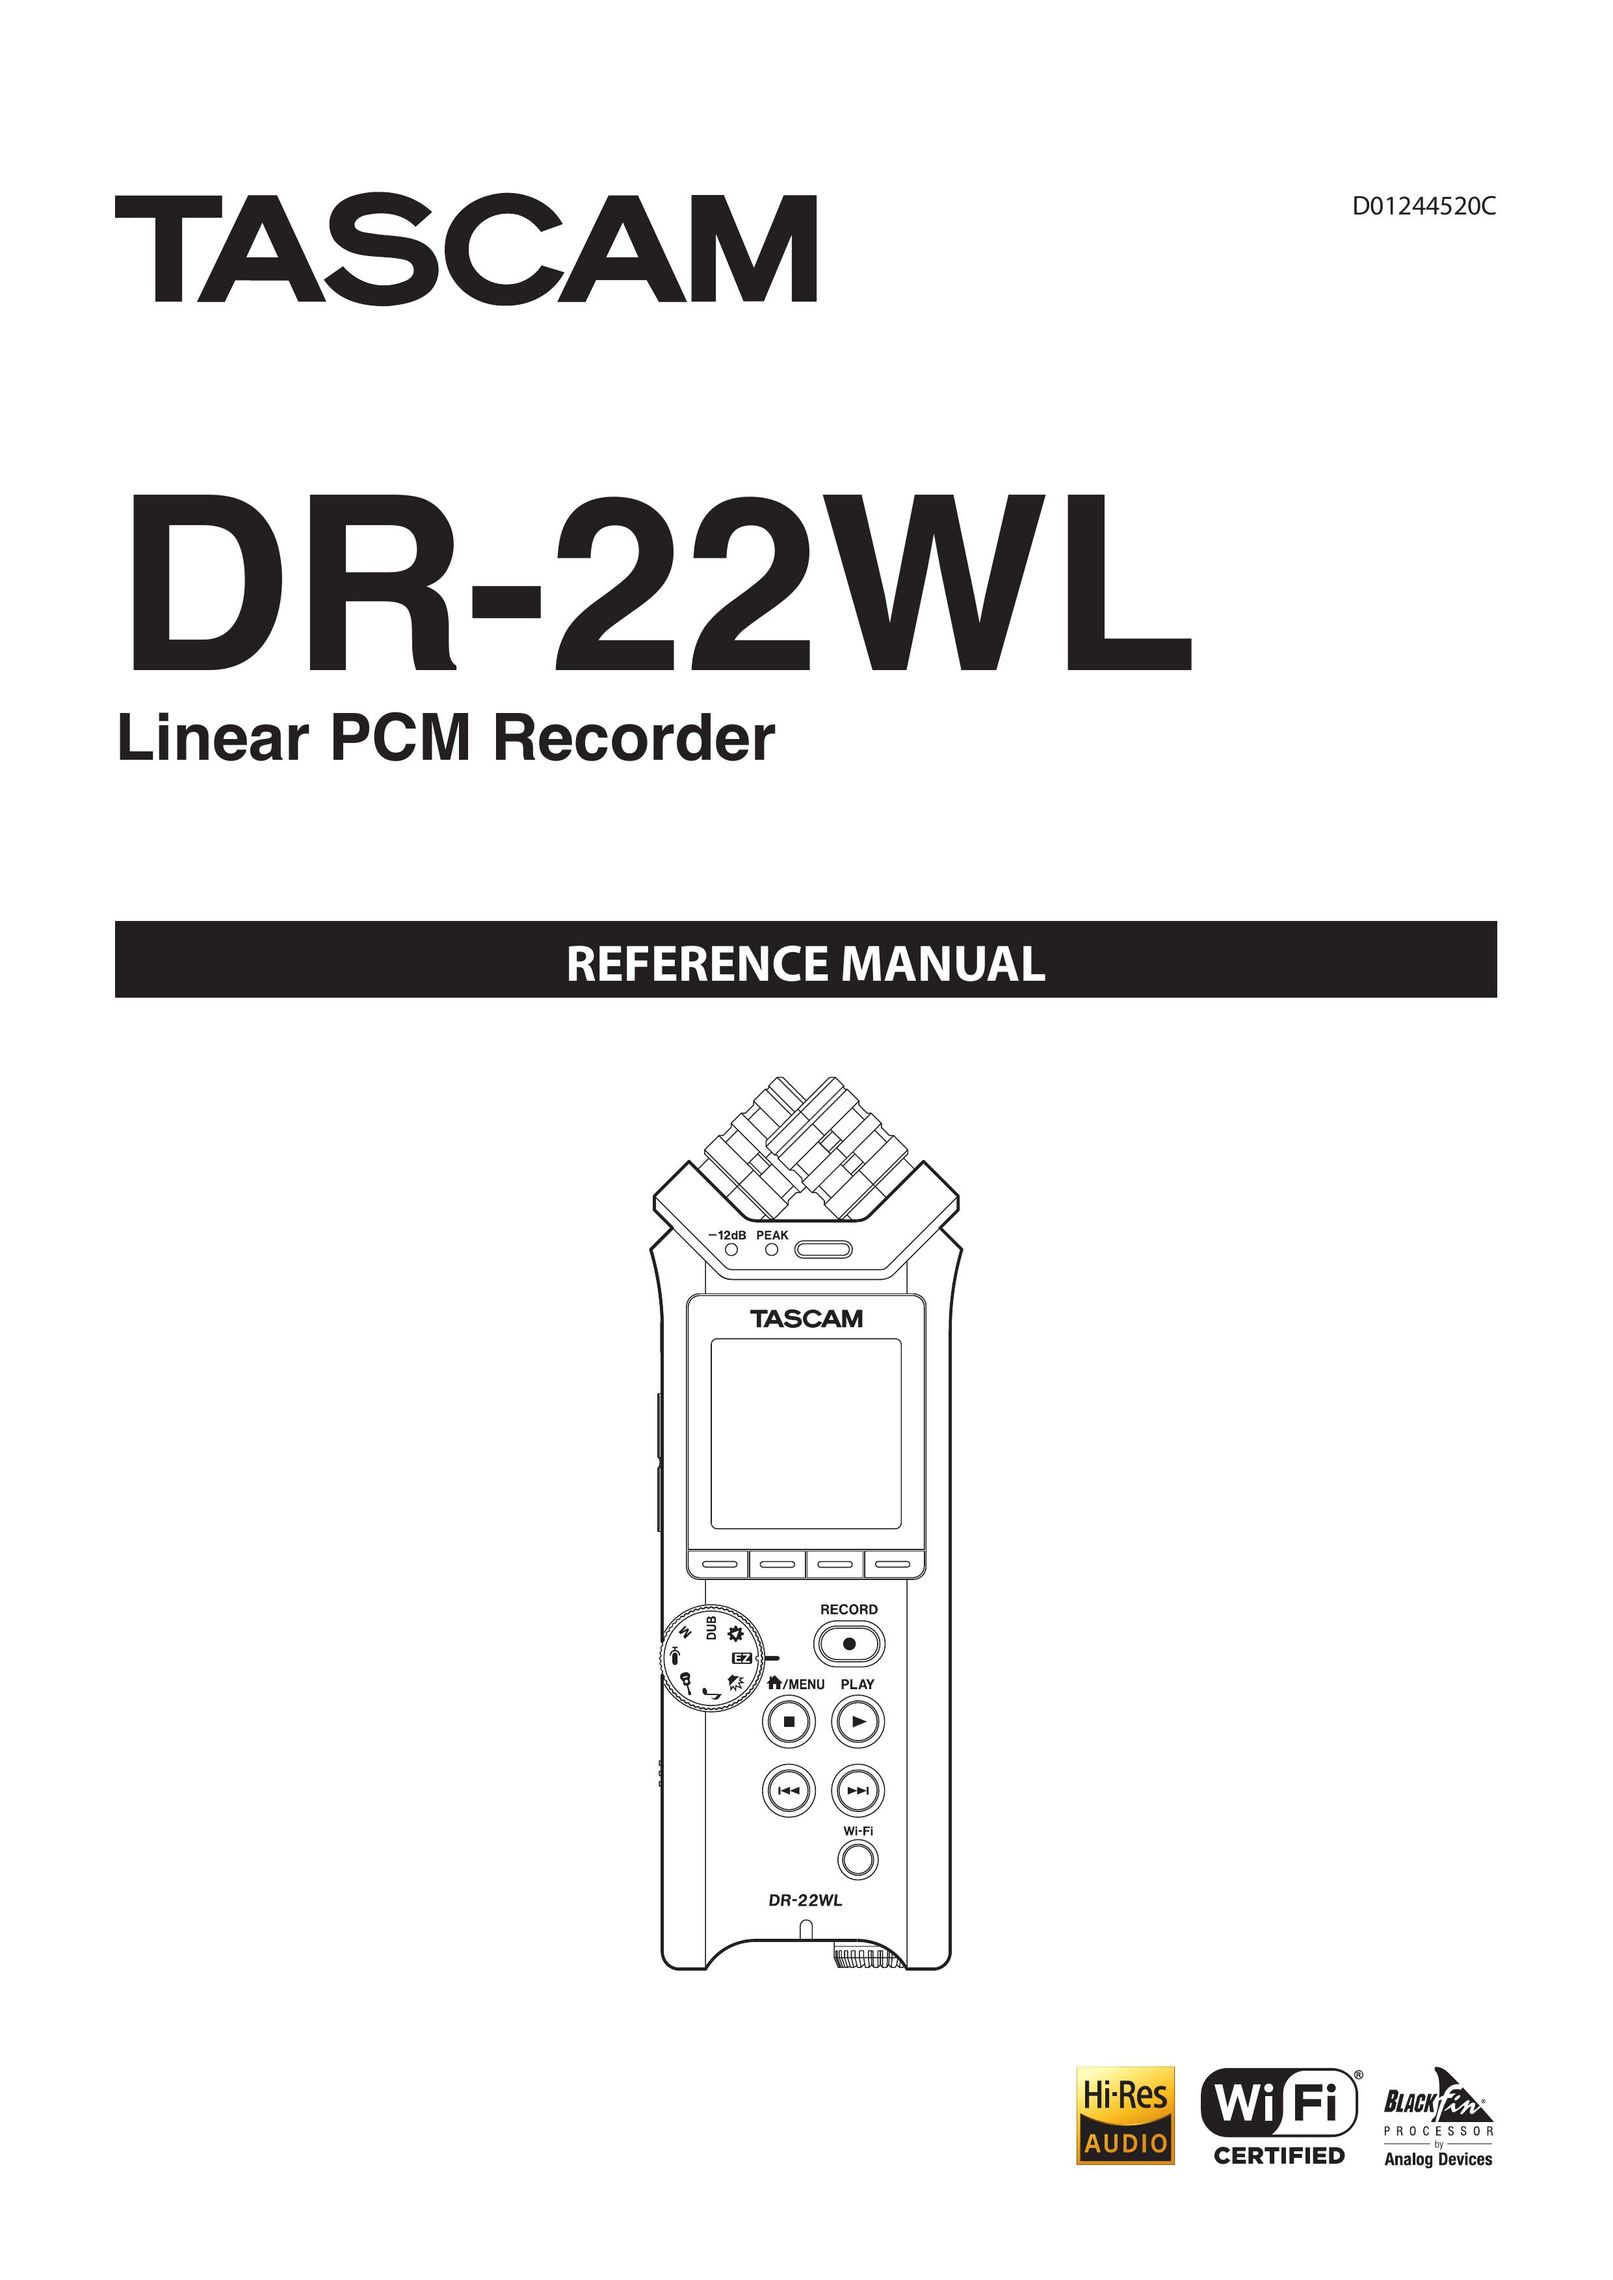 Tascam DR-22WL MP3 Player User Manual